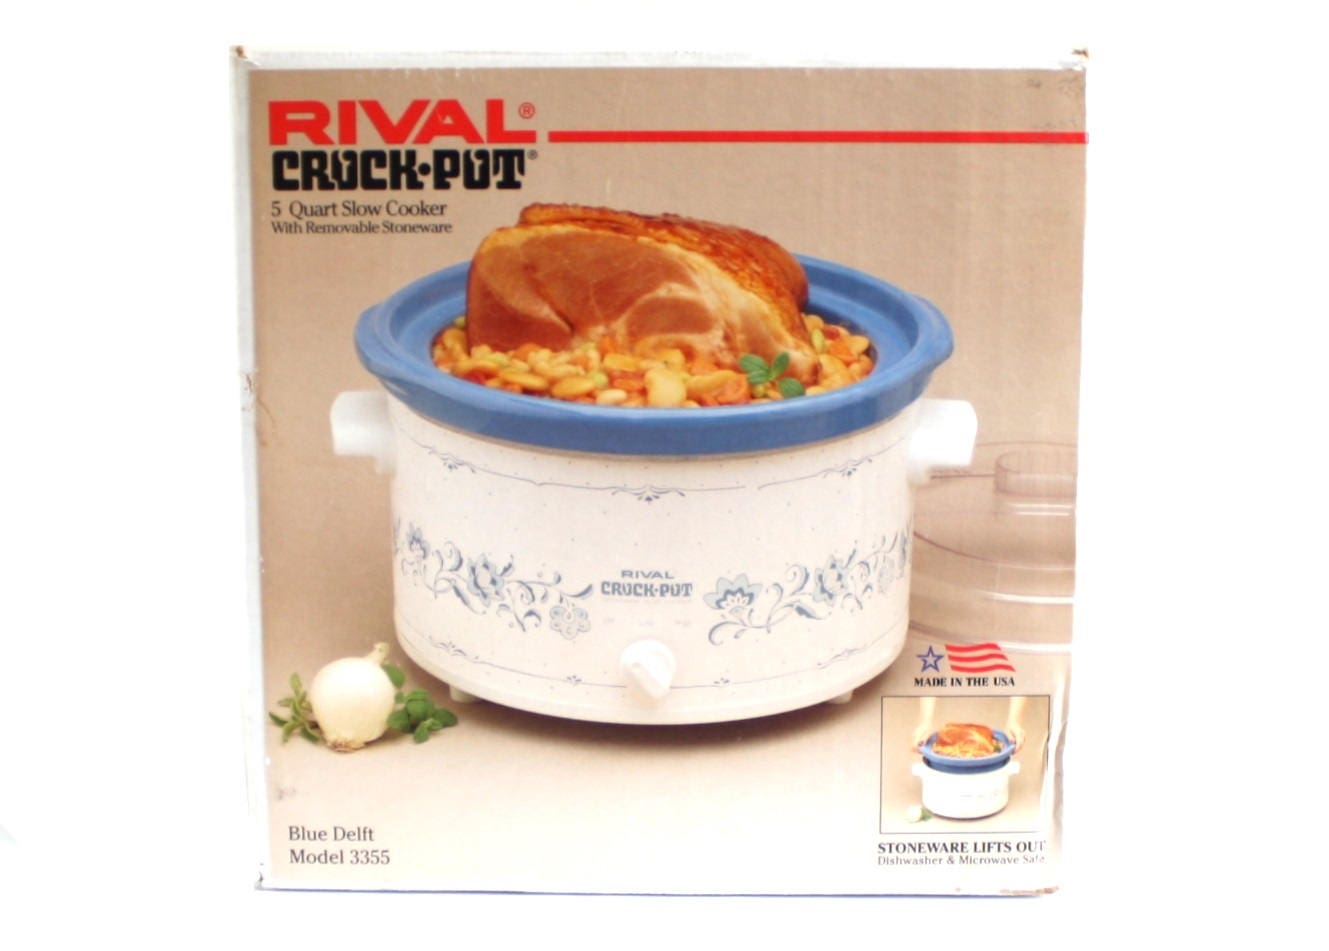 5.5 Qt Rival Crock Pot Stoneware - Cookers & Steamers - Windsor, California, Facebook Marketplace